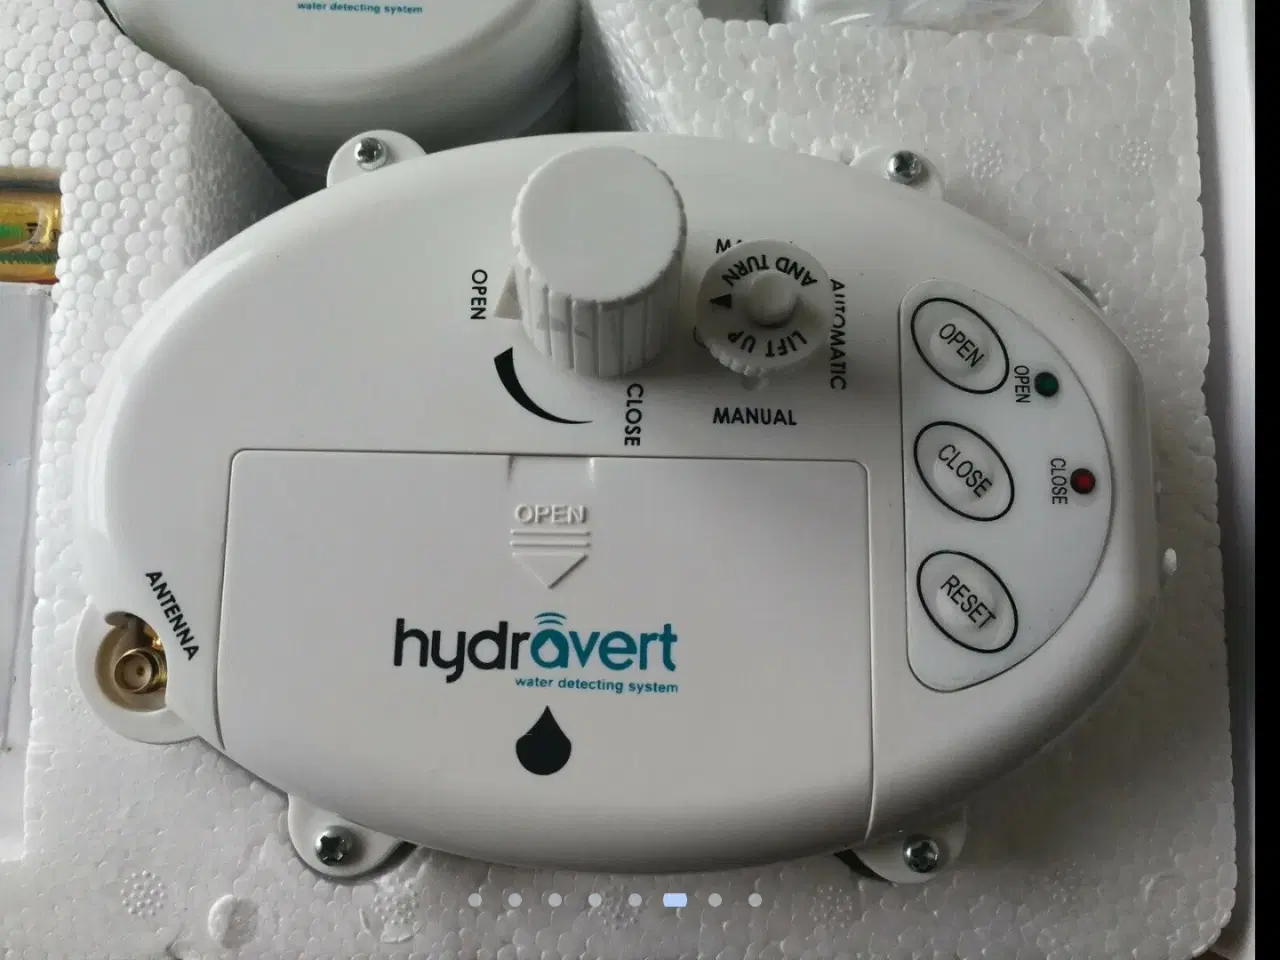 Billede 3 - Water detecting system, Hydravert - Water detectin